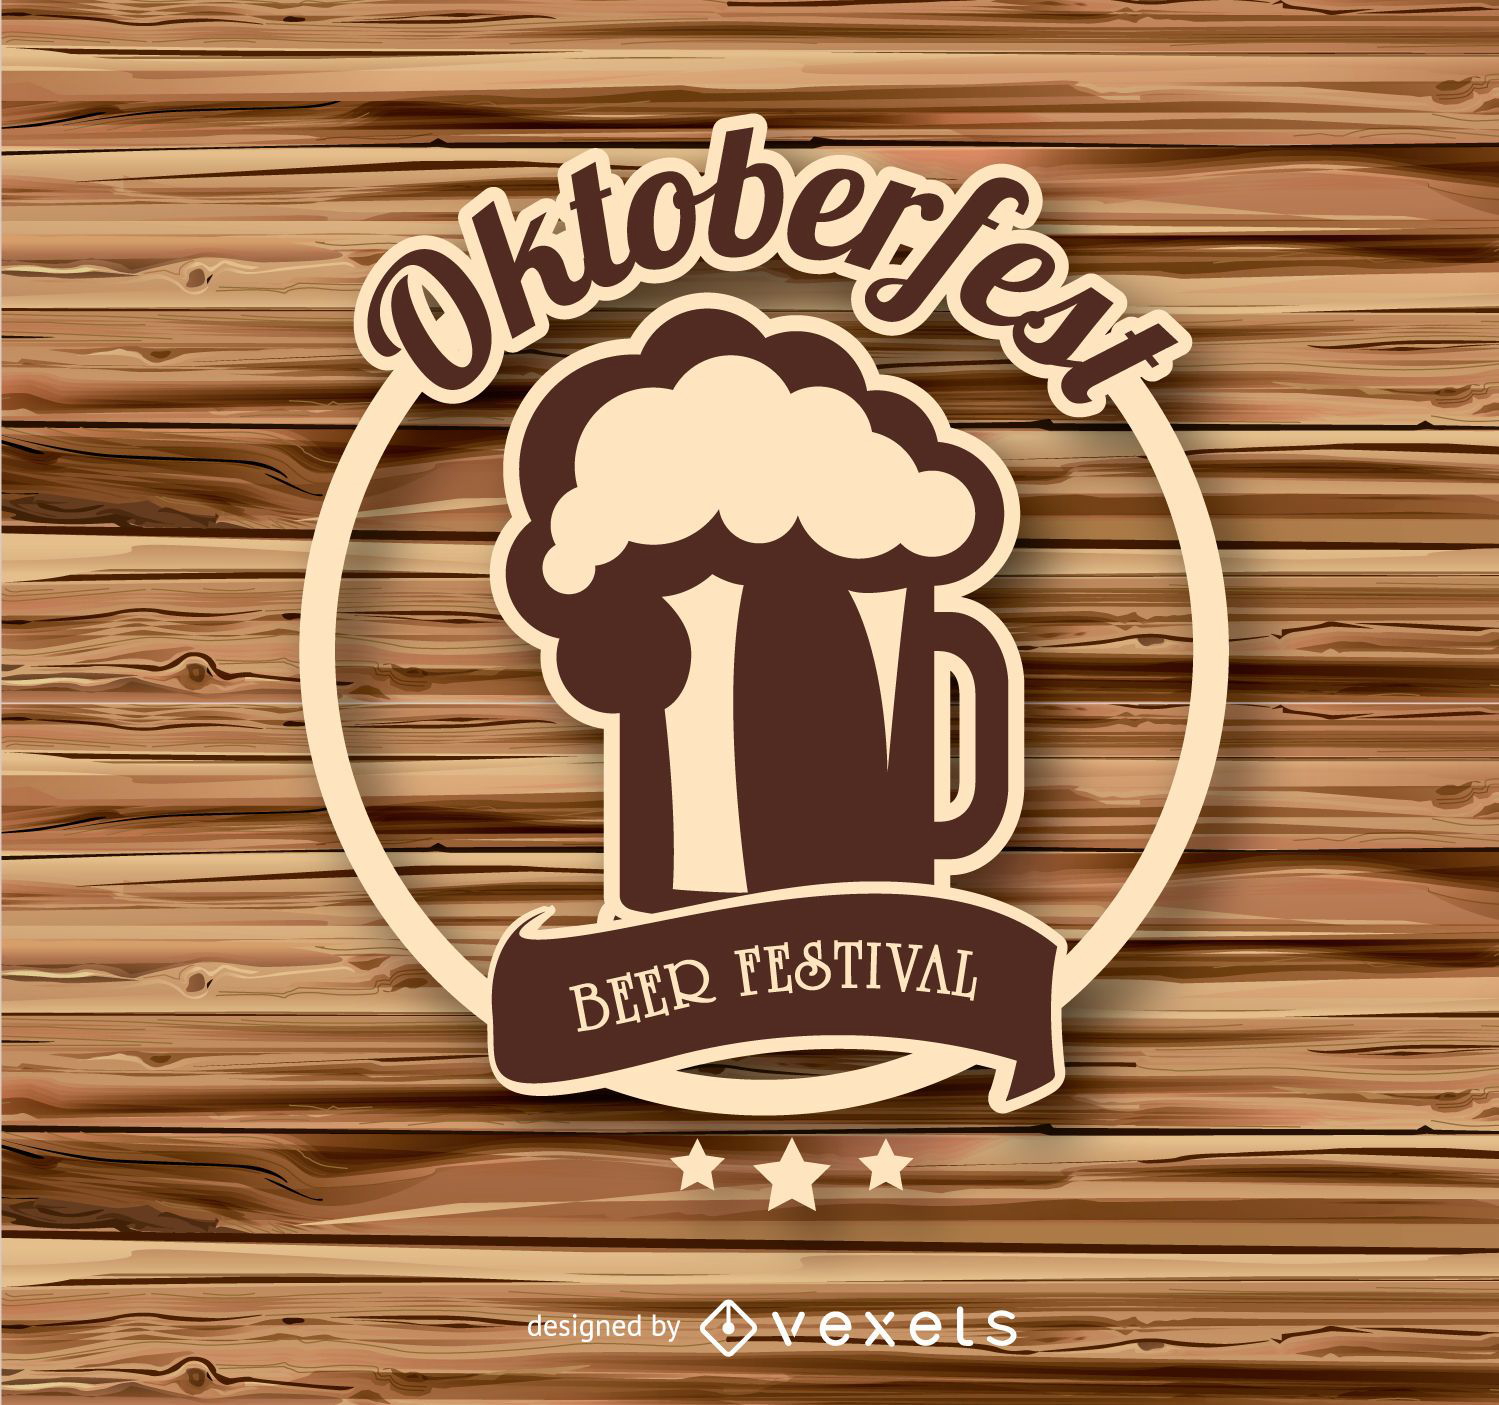 Insignia del logotipo de Oktoberfest